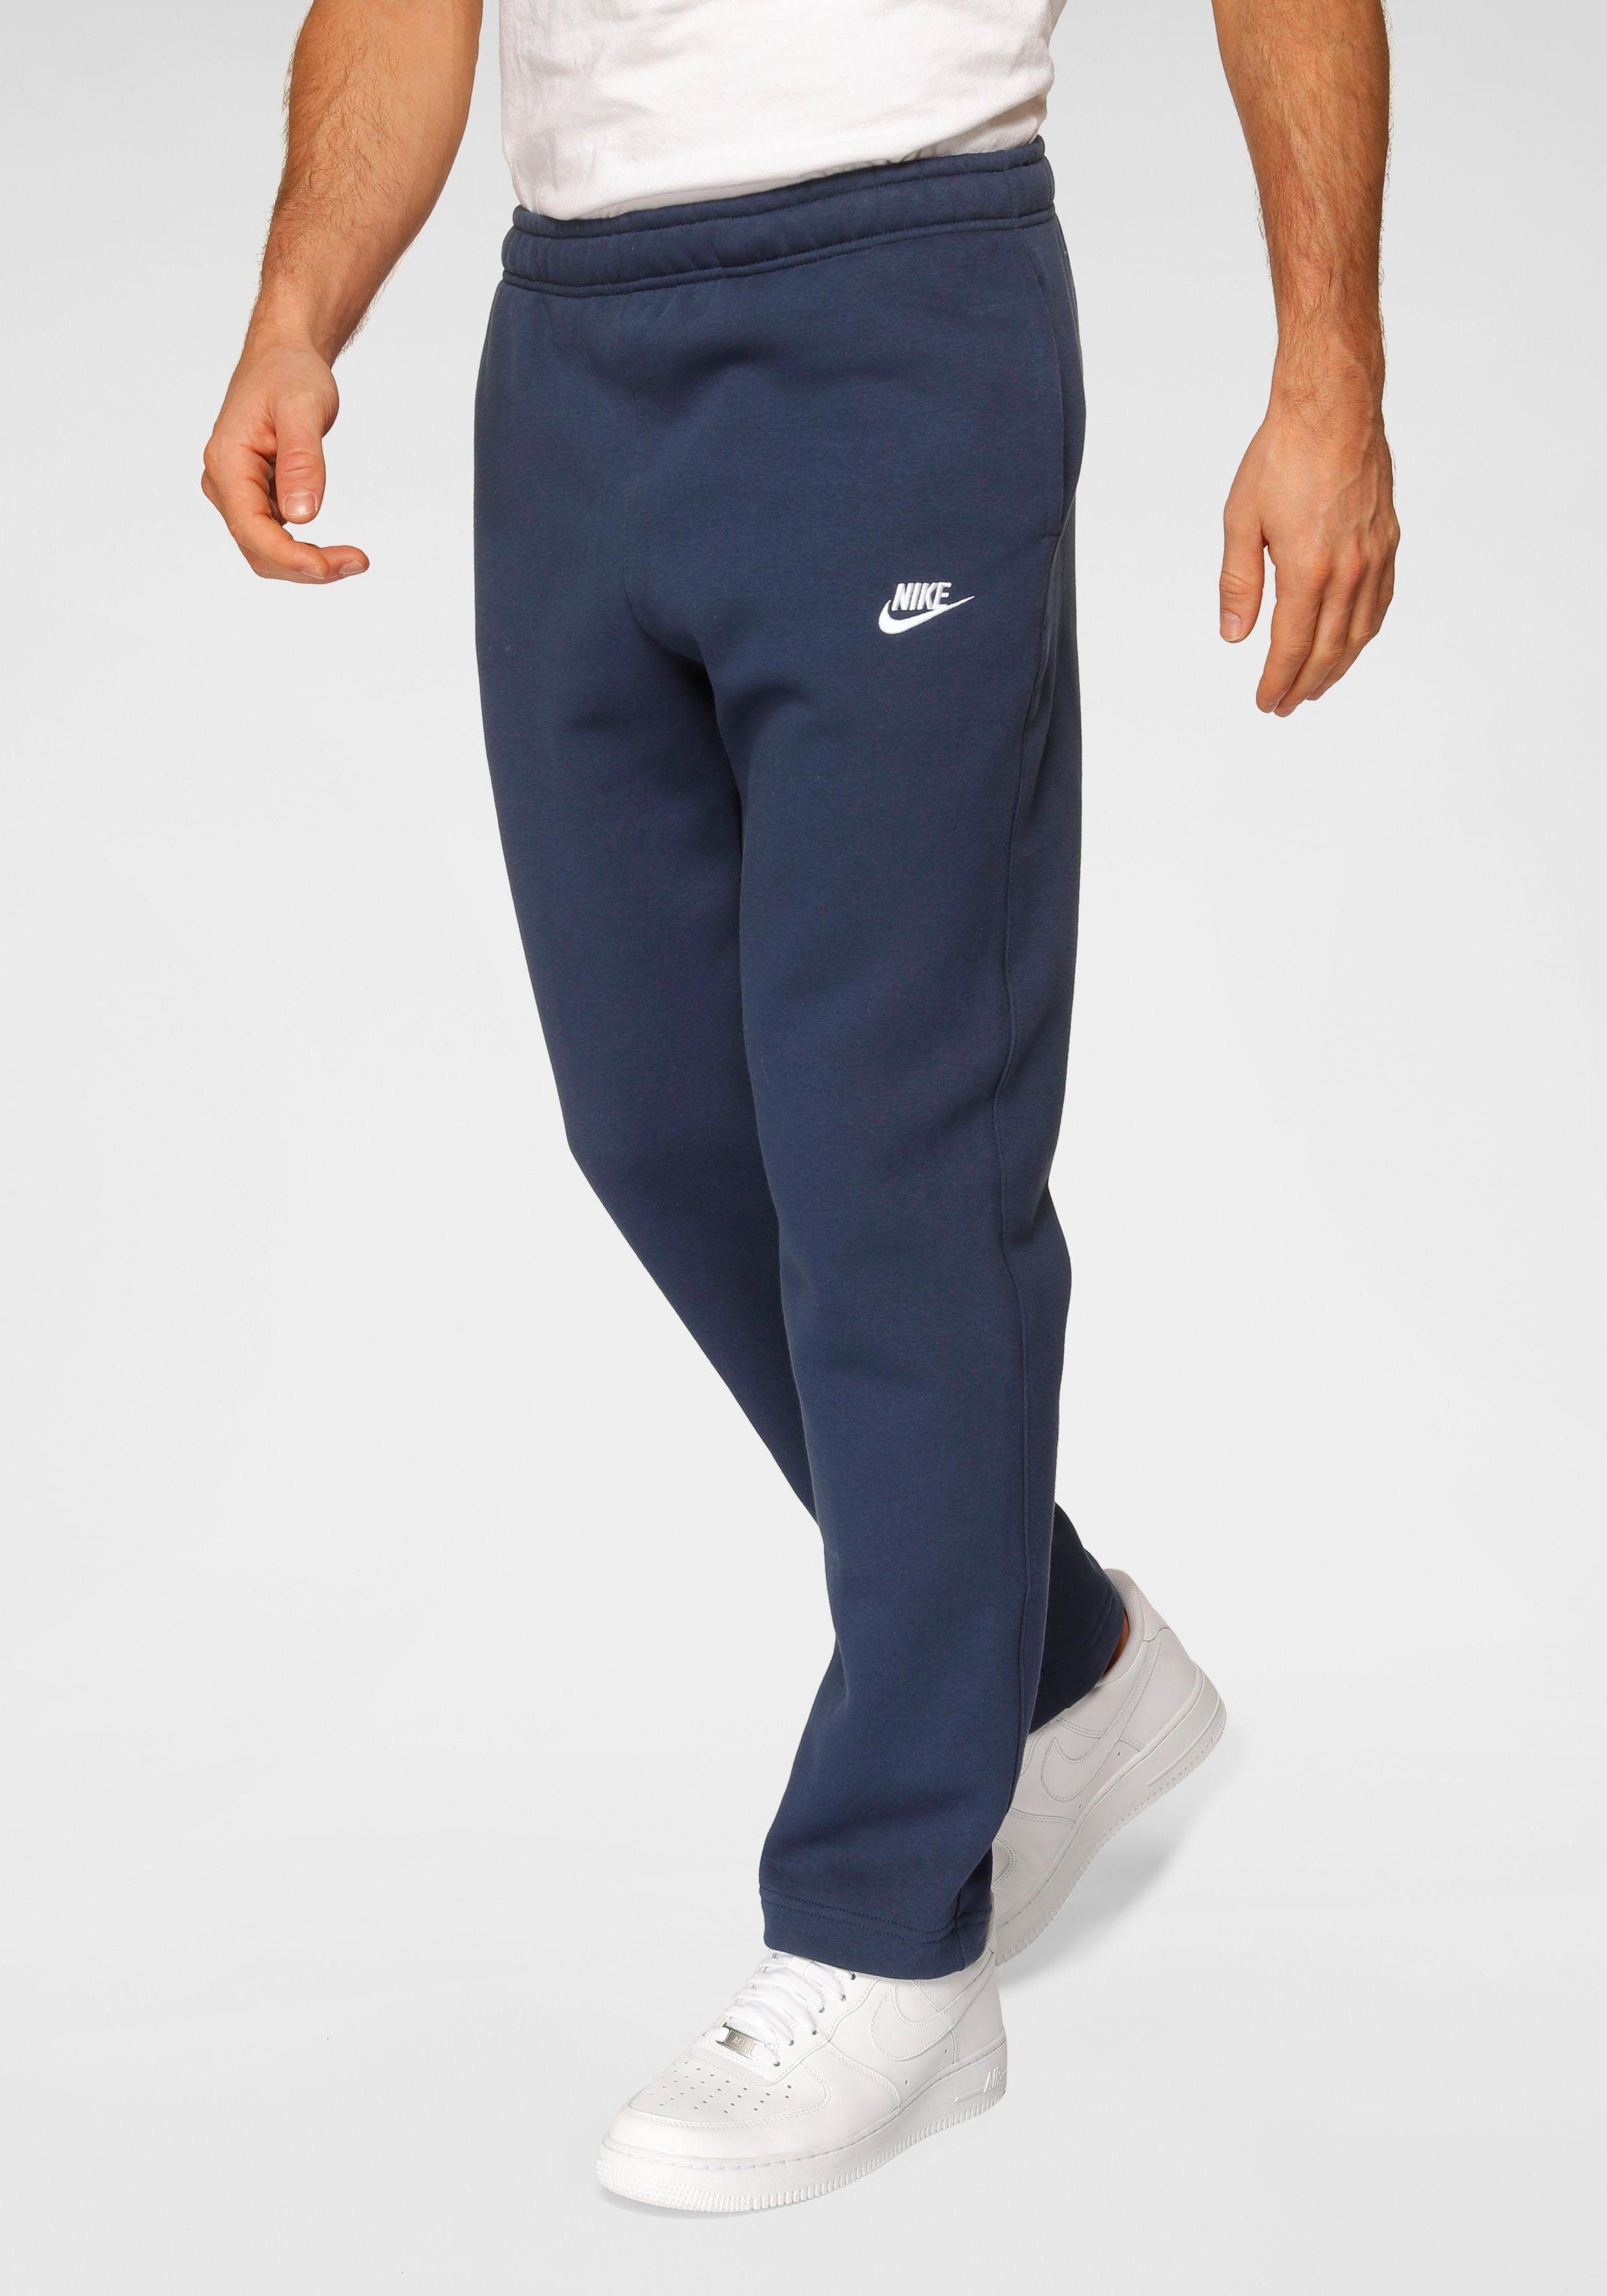 Jogginghosen in blau online kaufen » Blaue Sweatpants | OTTO